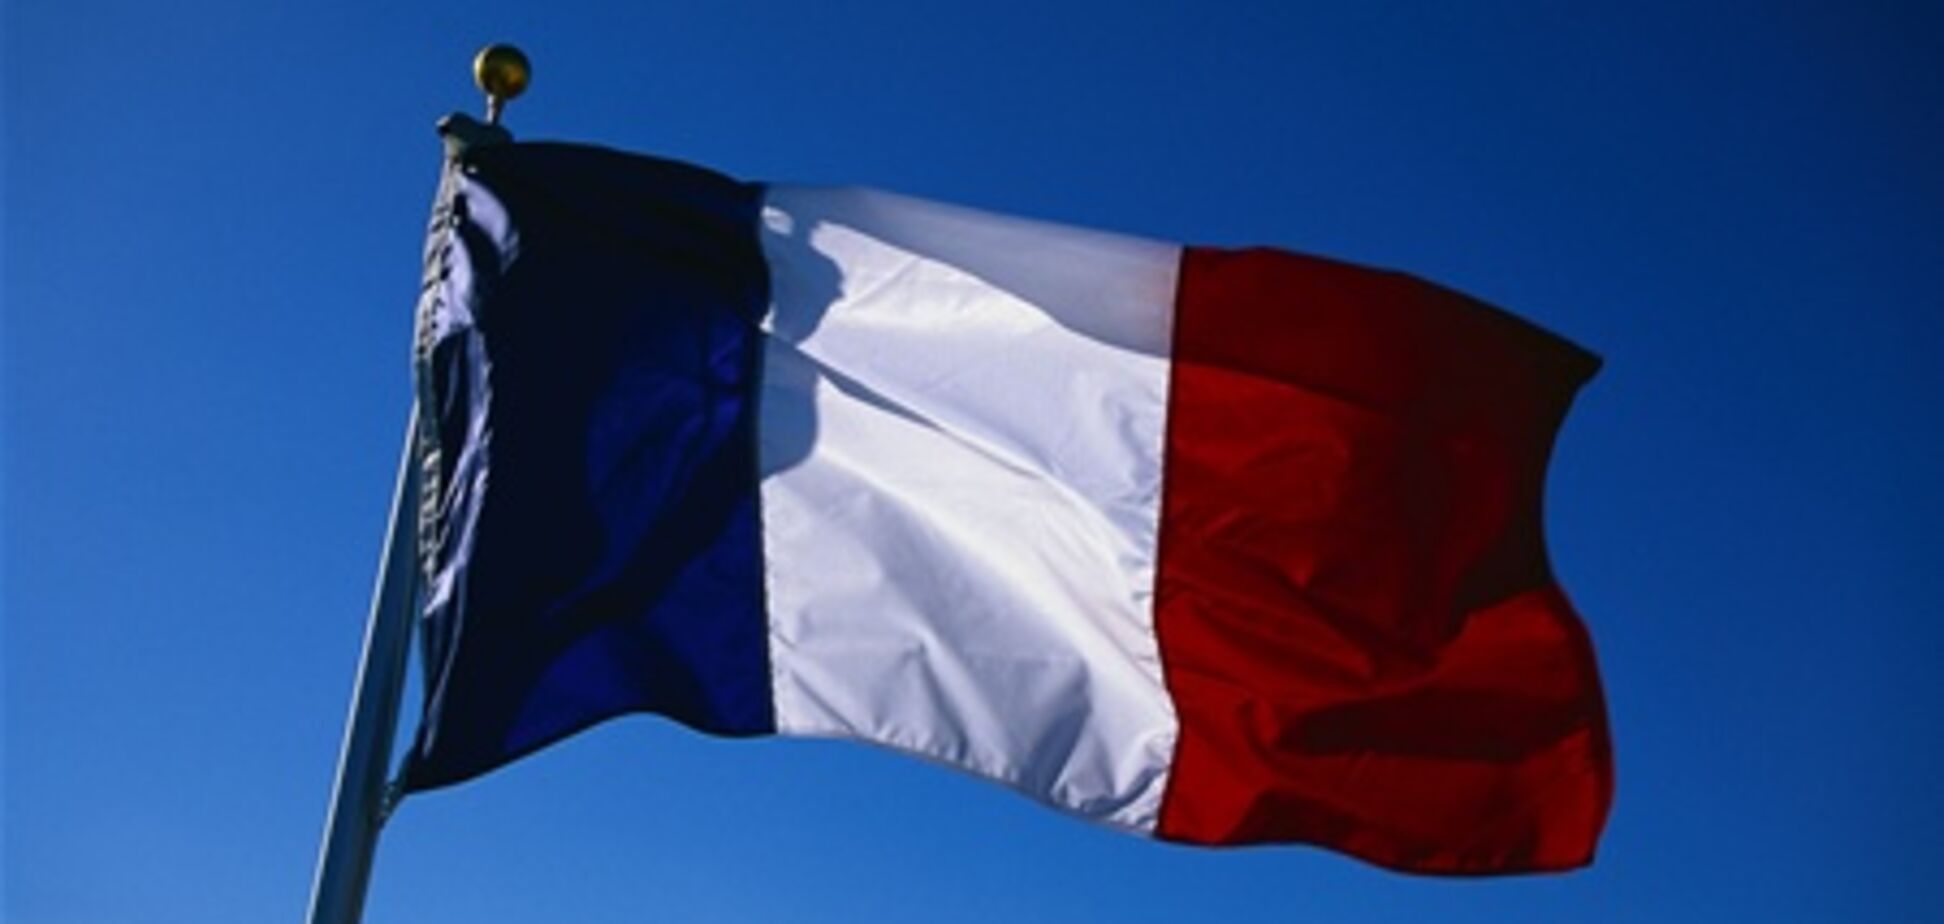 Франция дополнительно сократит госрасходы на 6-8 млрд евро